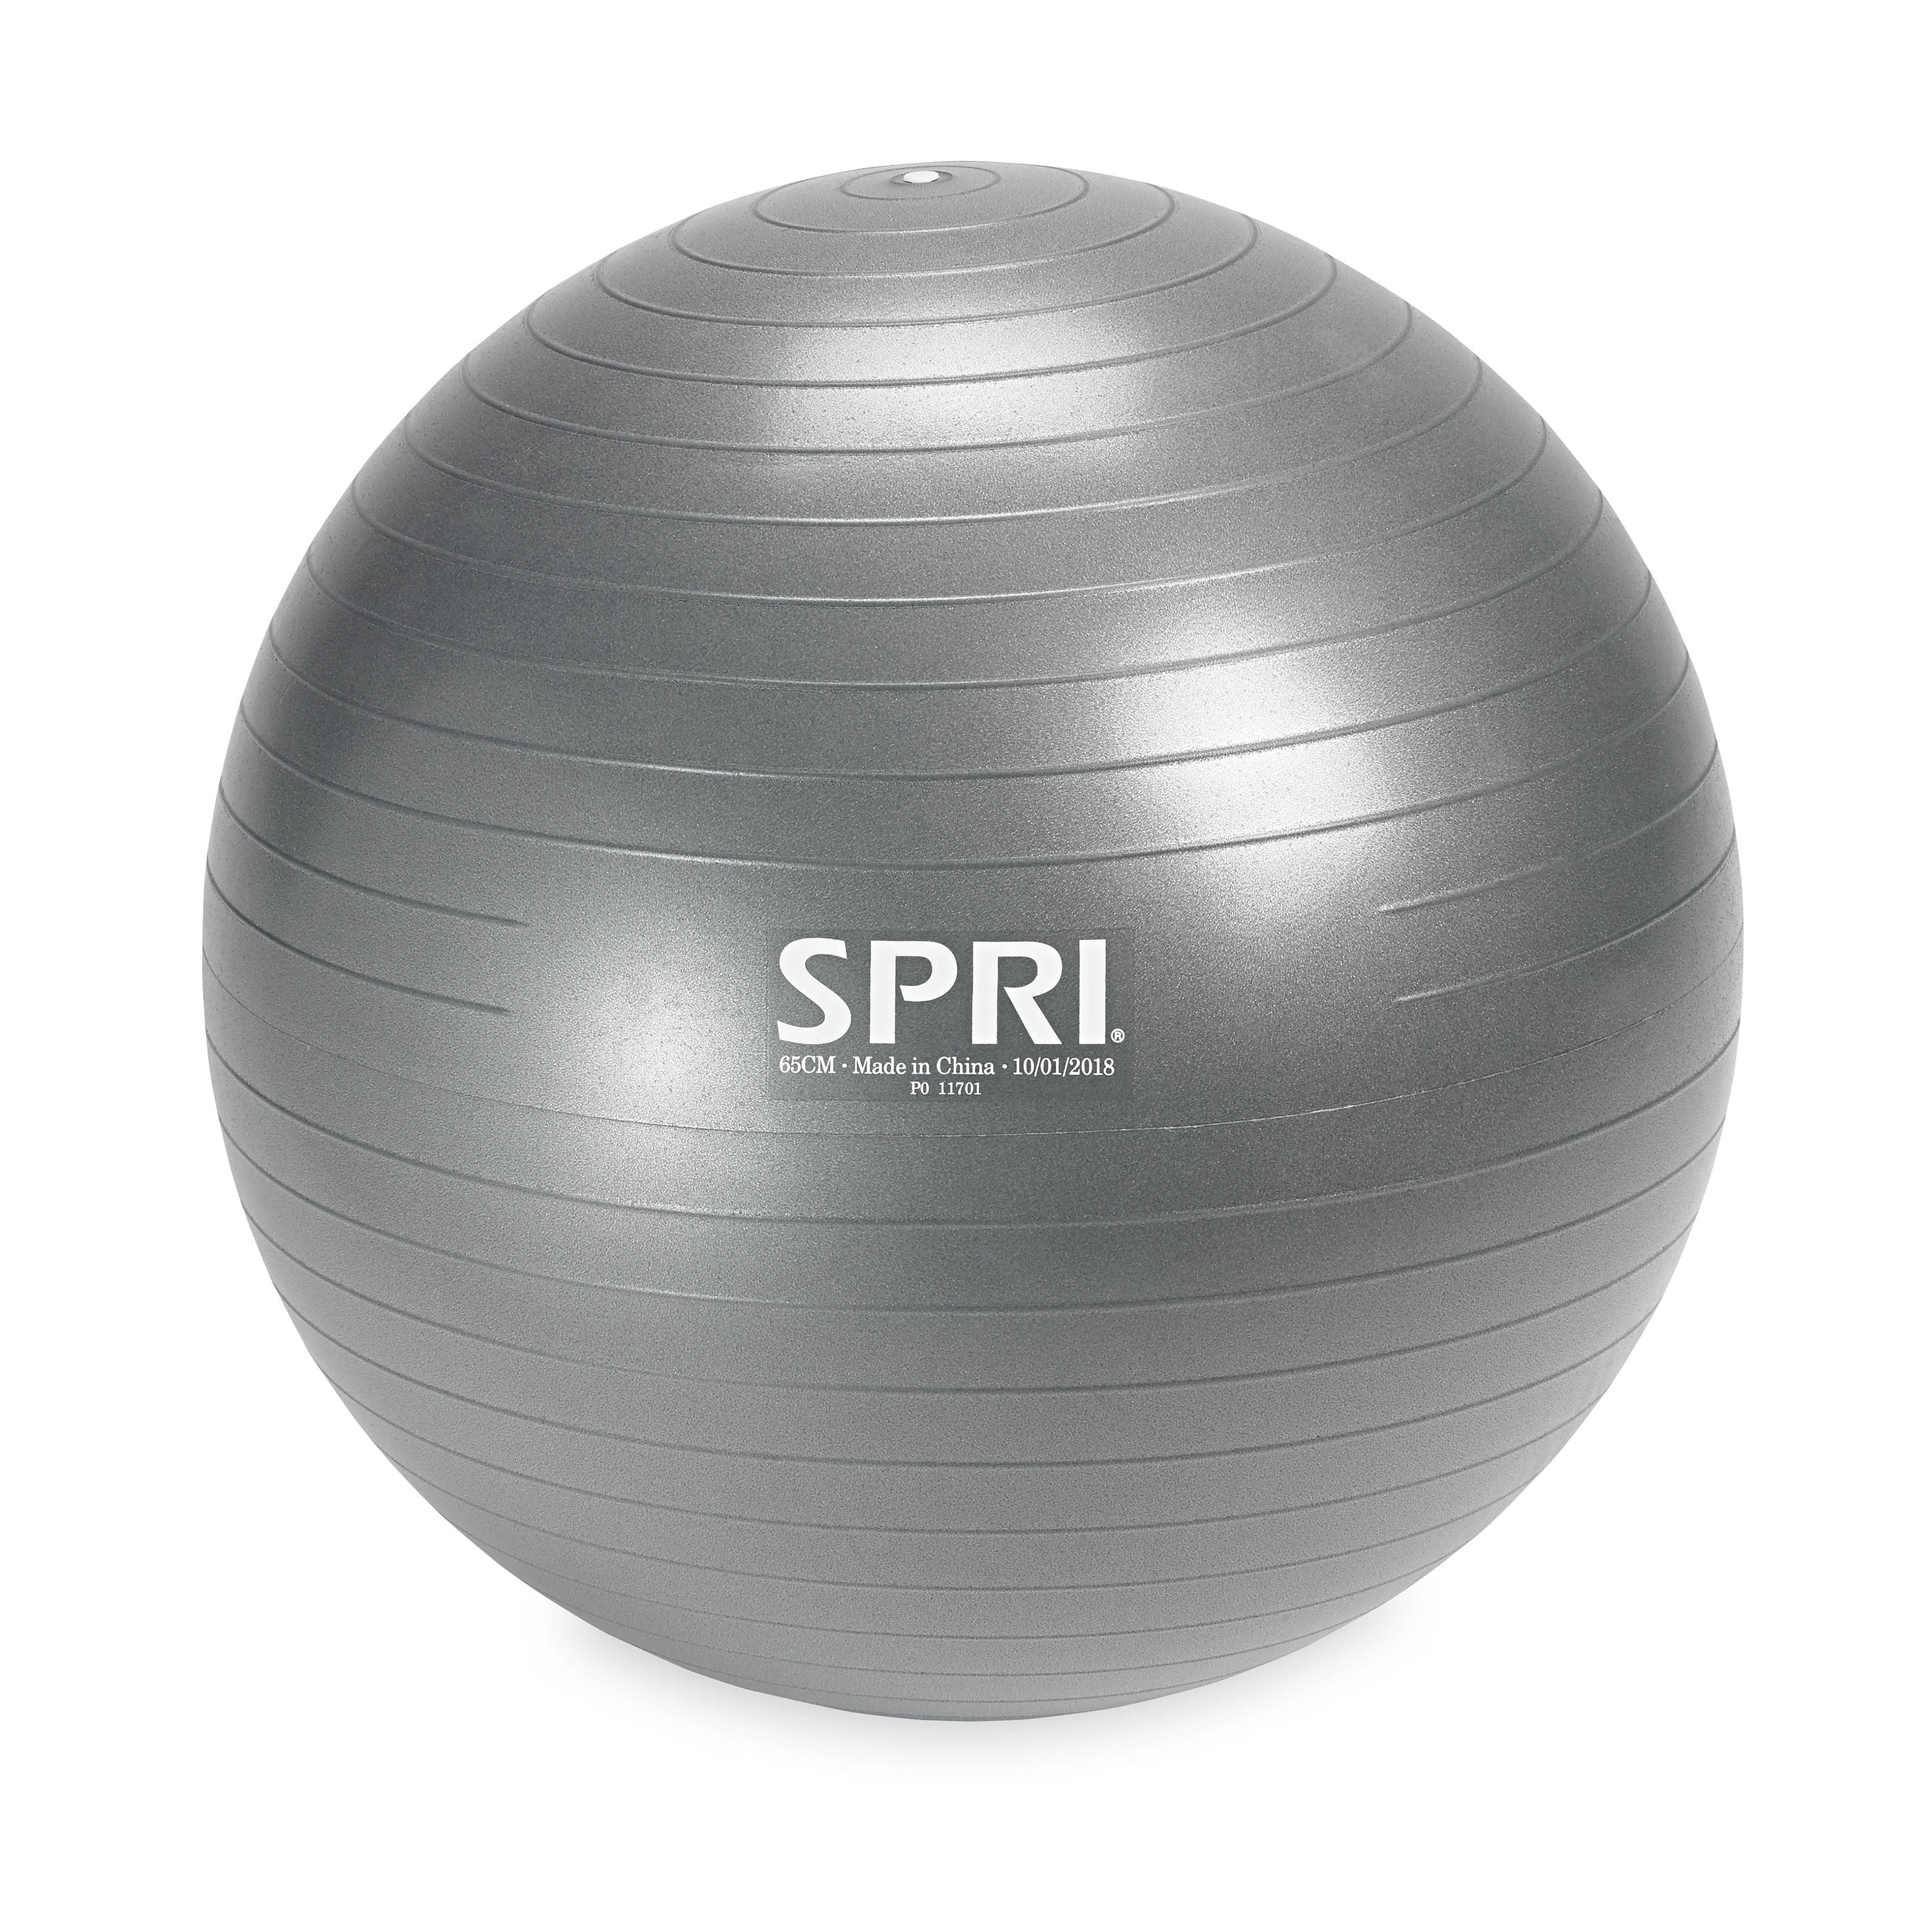 SPRI Weighted Ball, 65CM - Walmart.com 